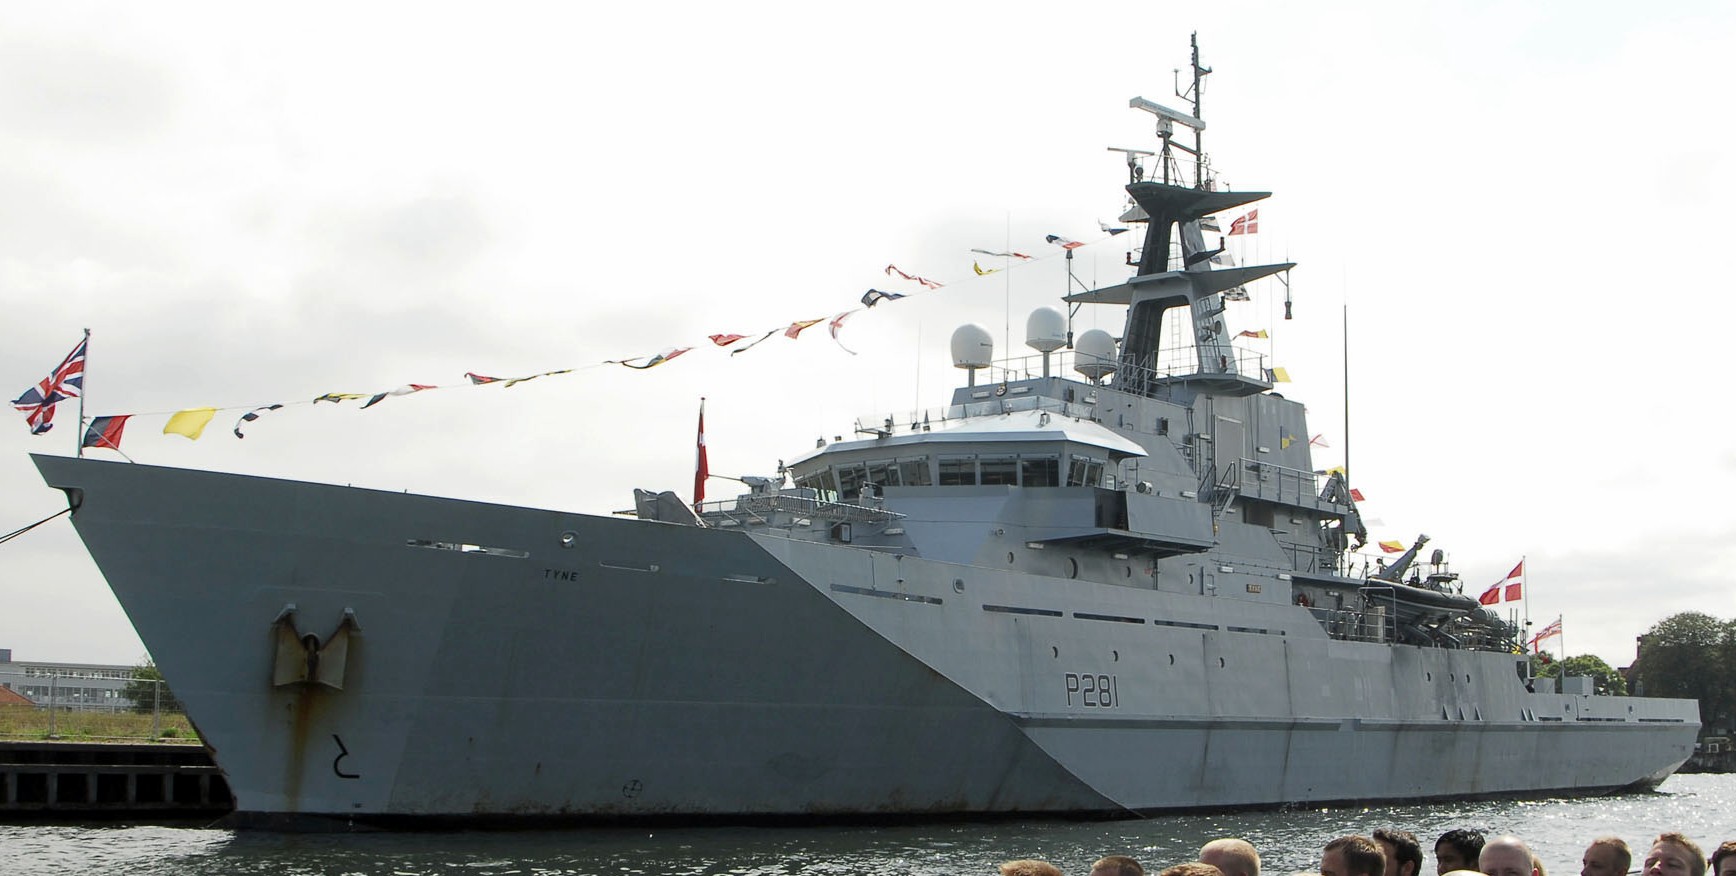 p281 hms tyne river class offshore patrol vessel opv royal navy 09